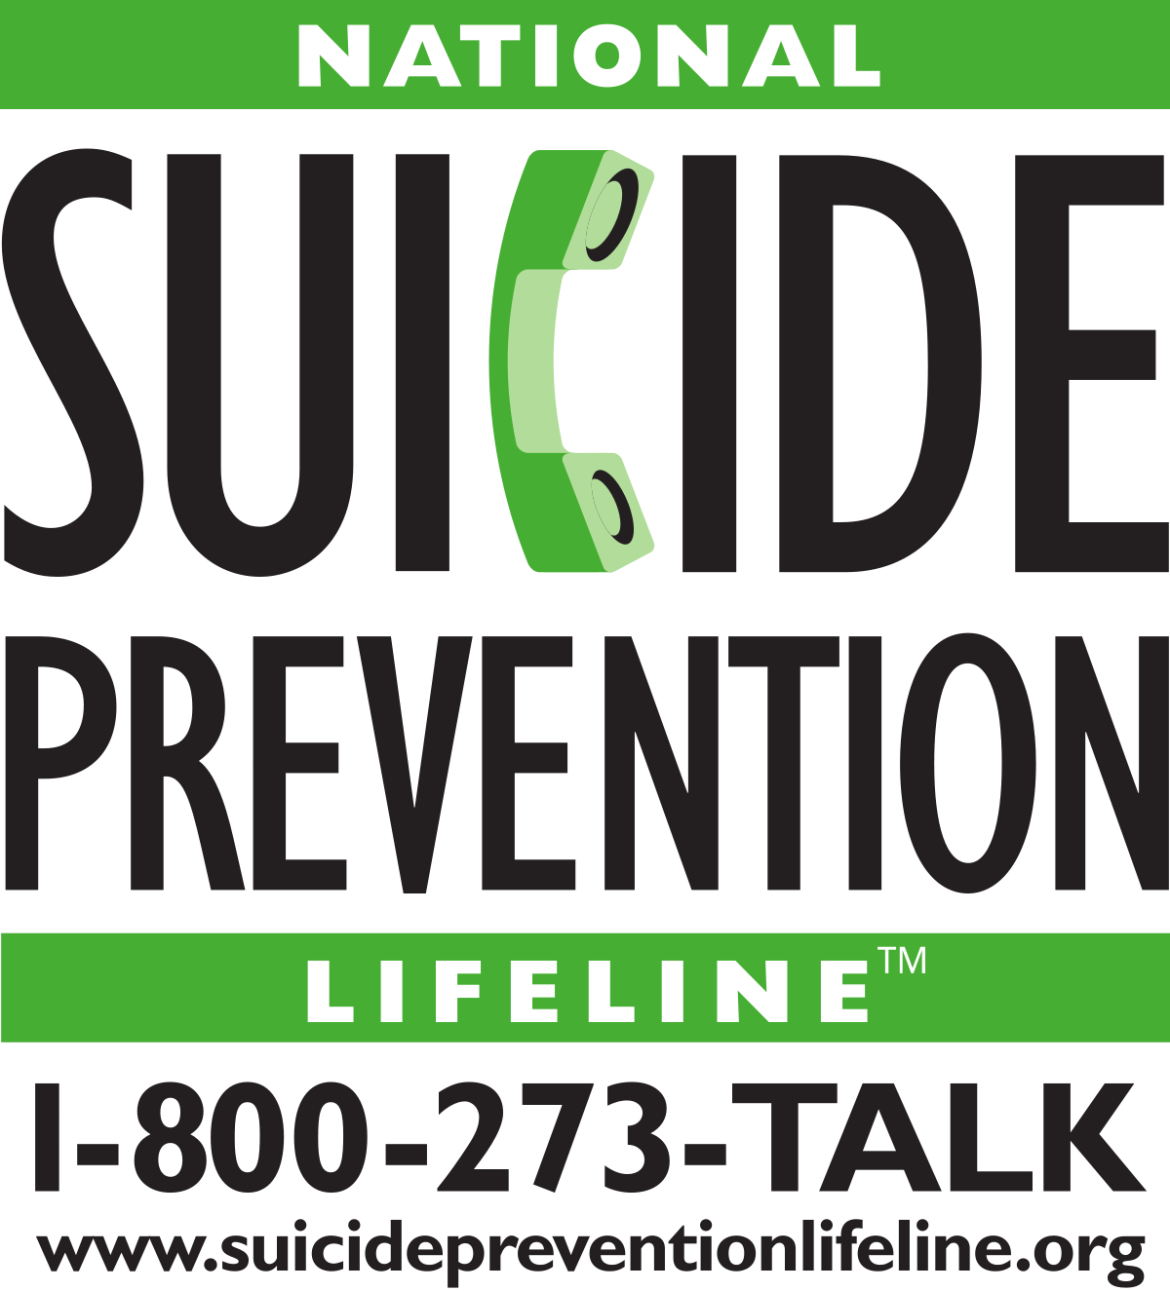 National Suicide Prevention Lifeline (1-800-273-TALK) poster